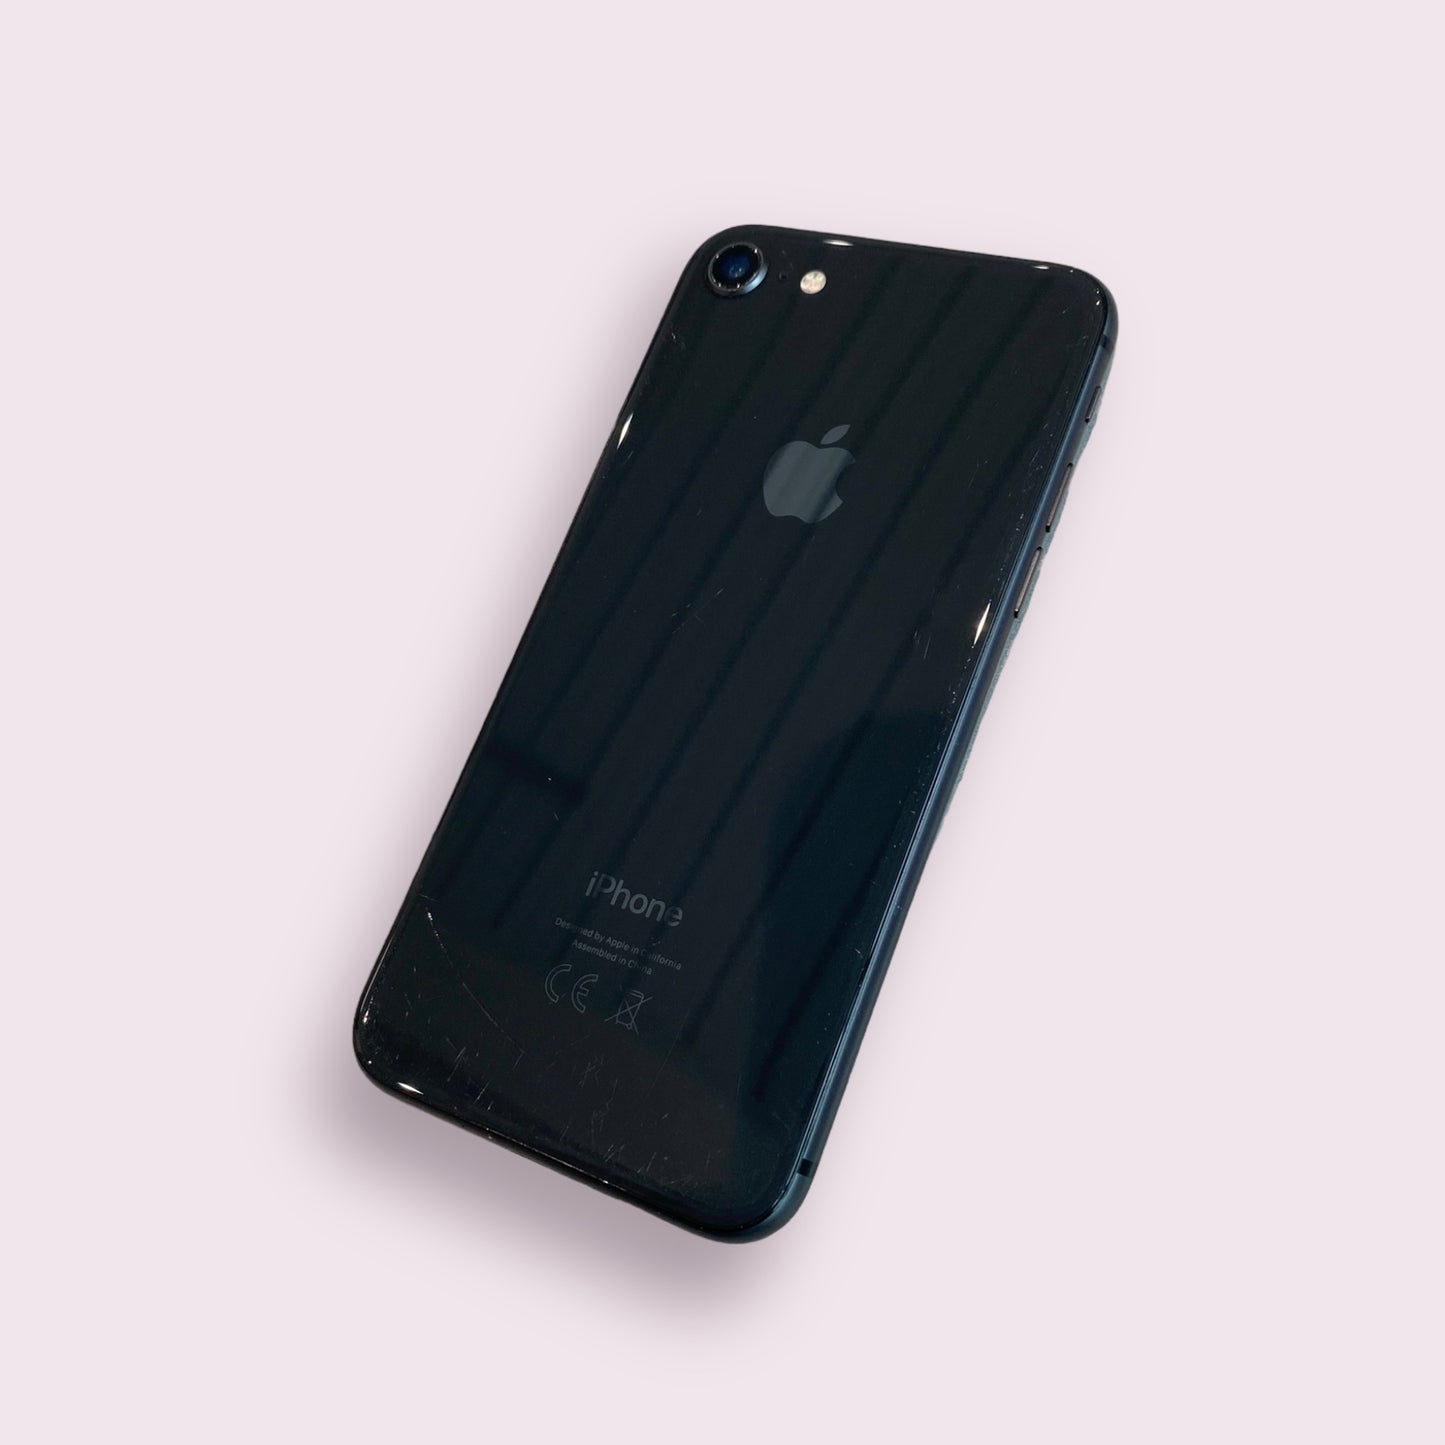 Apple iPhone 8 256GB Black Unlocked - Grade B